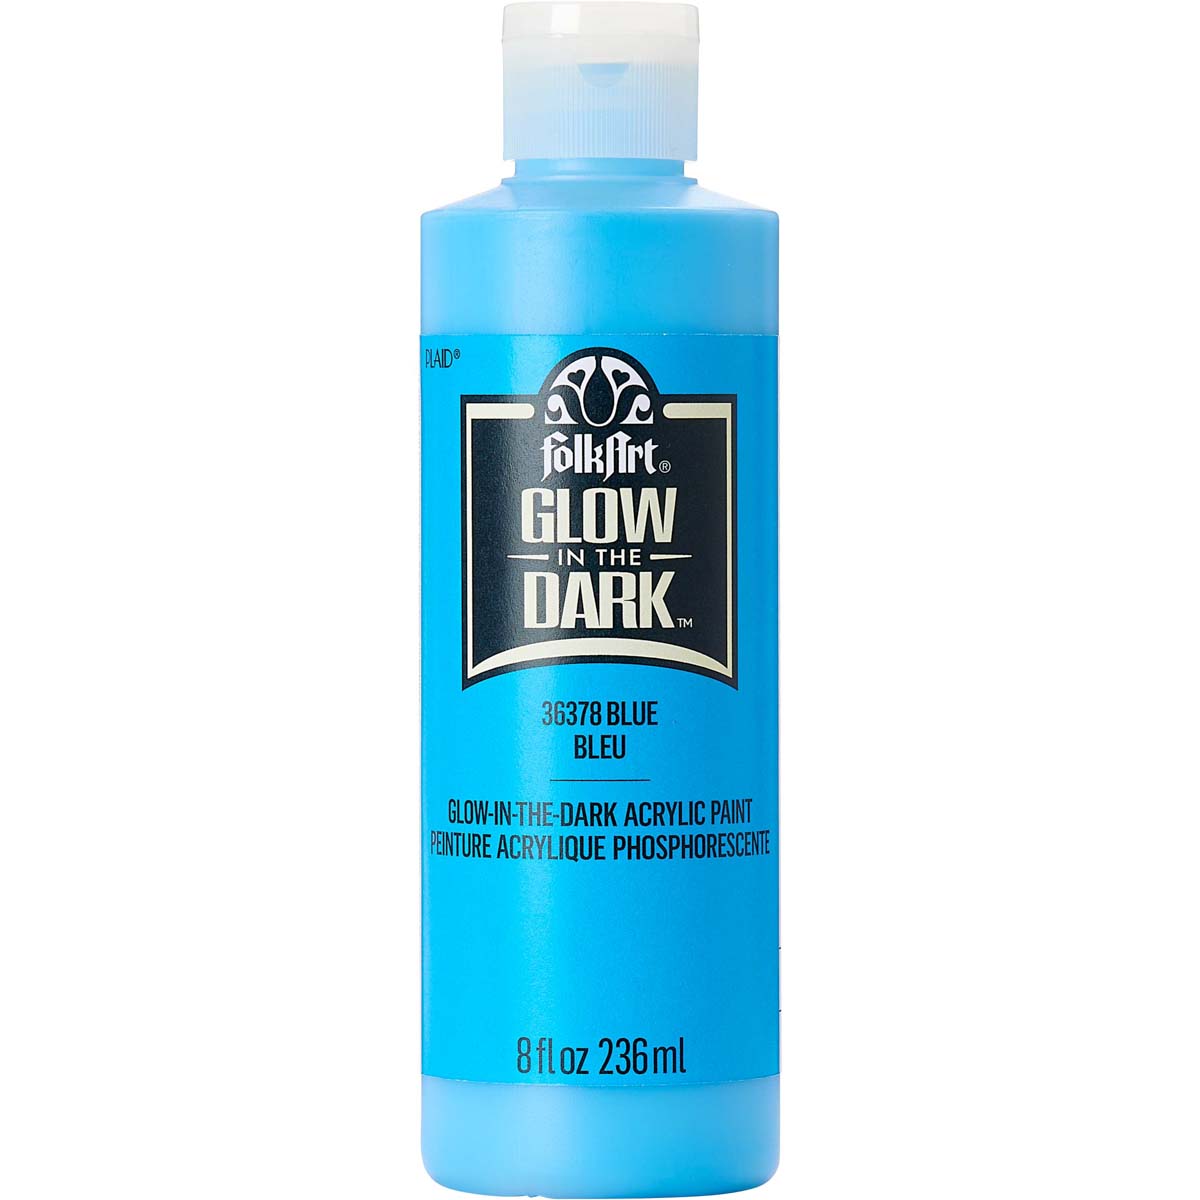 FolkArt ® Glow-in-the-Dark Acrylic Colors - Blue, 8 oz. - 36378